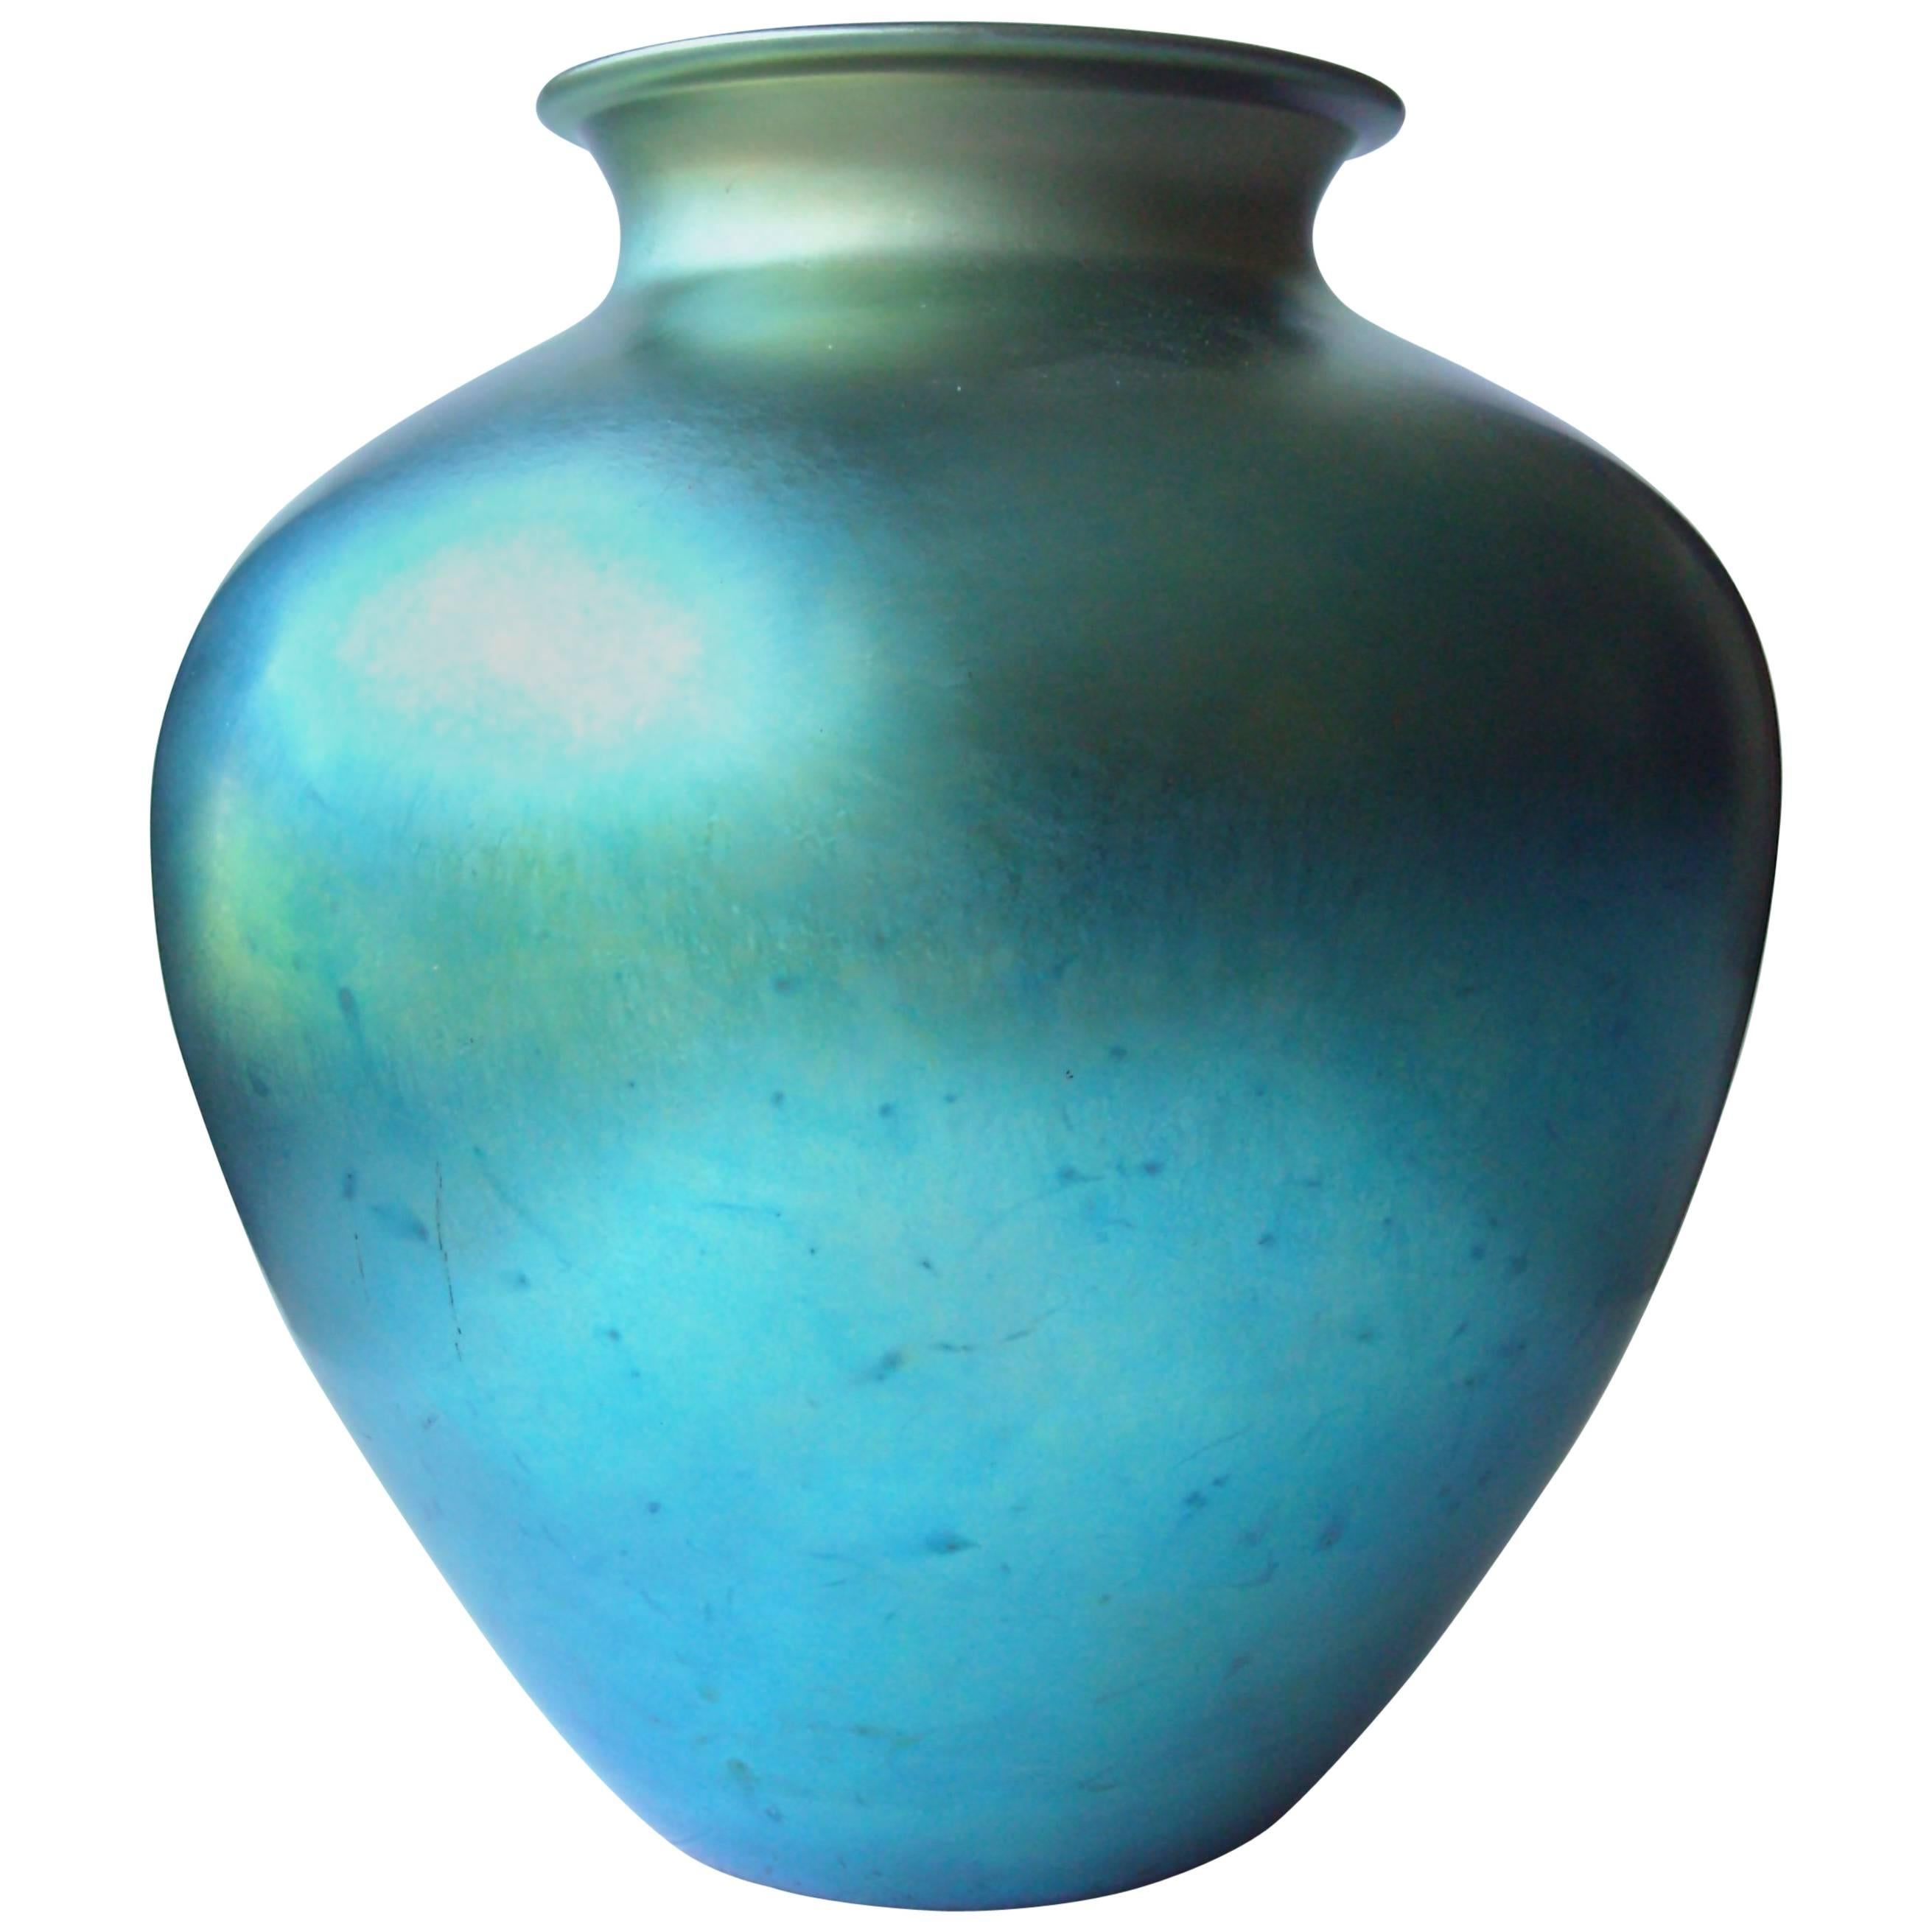 Steuben "Aurene" Blue Vase, Iridescent Monumental Size, Signed, Numbered